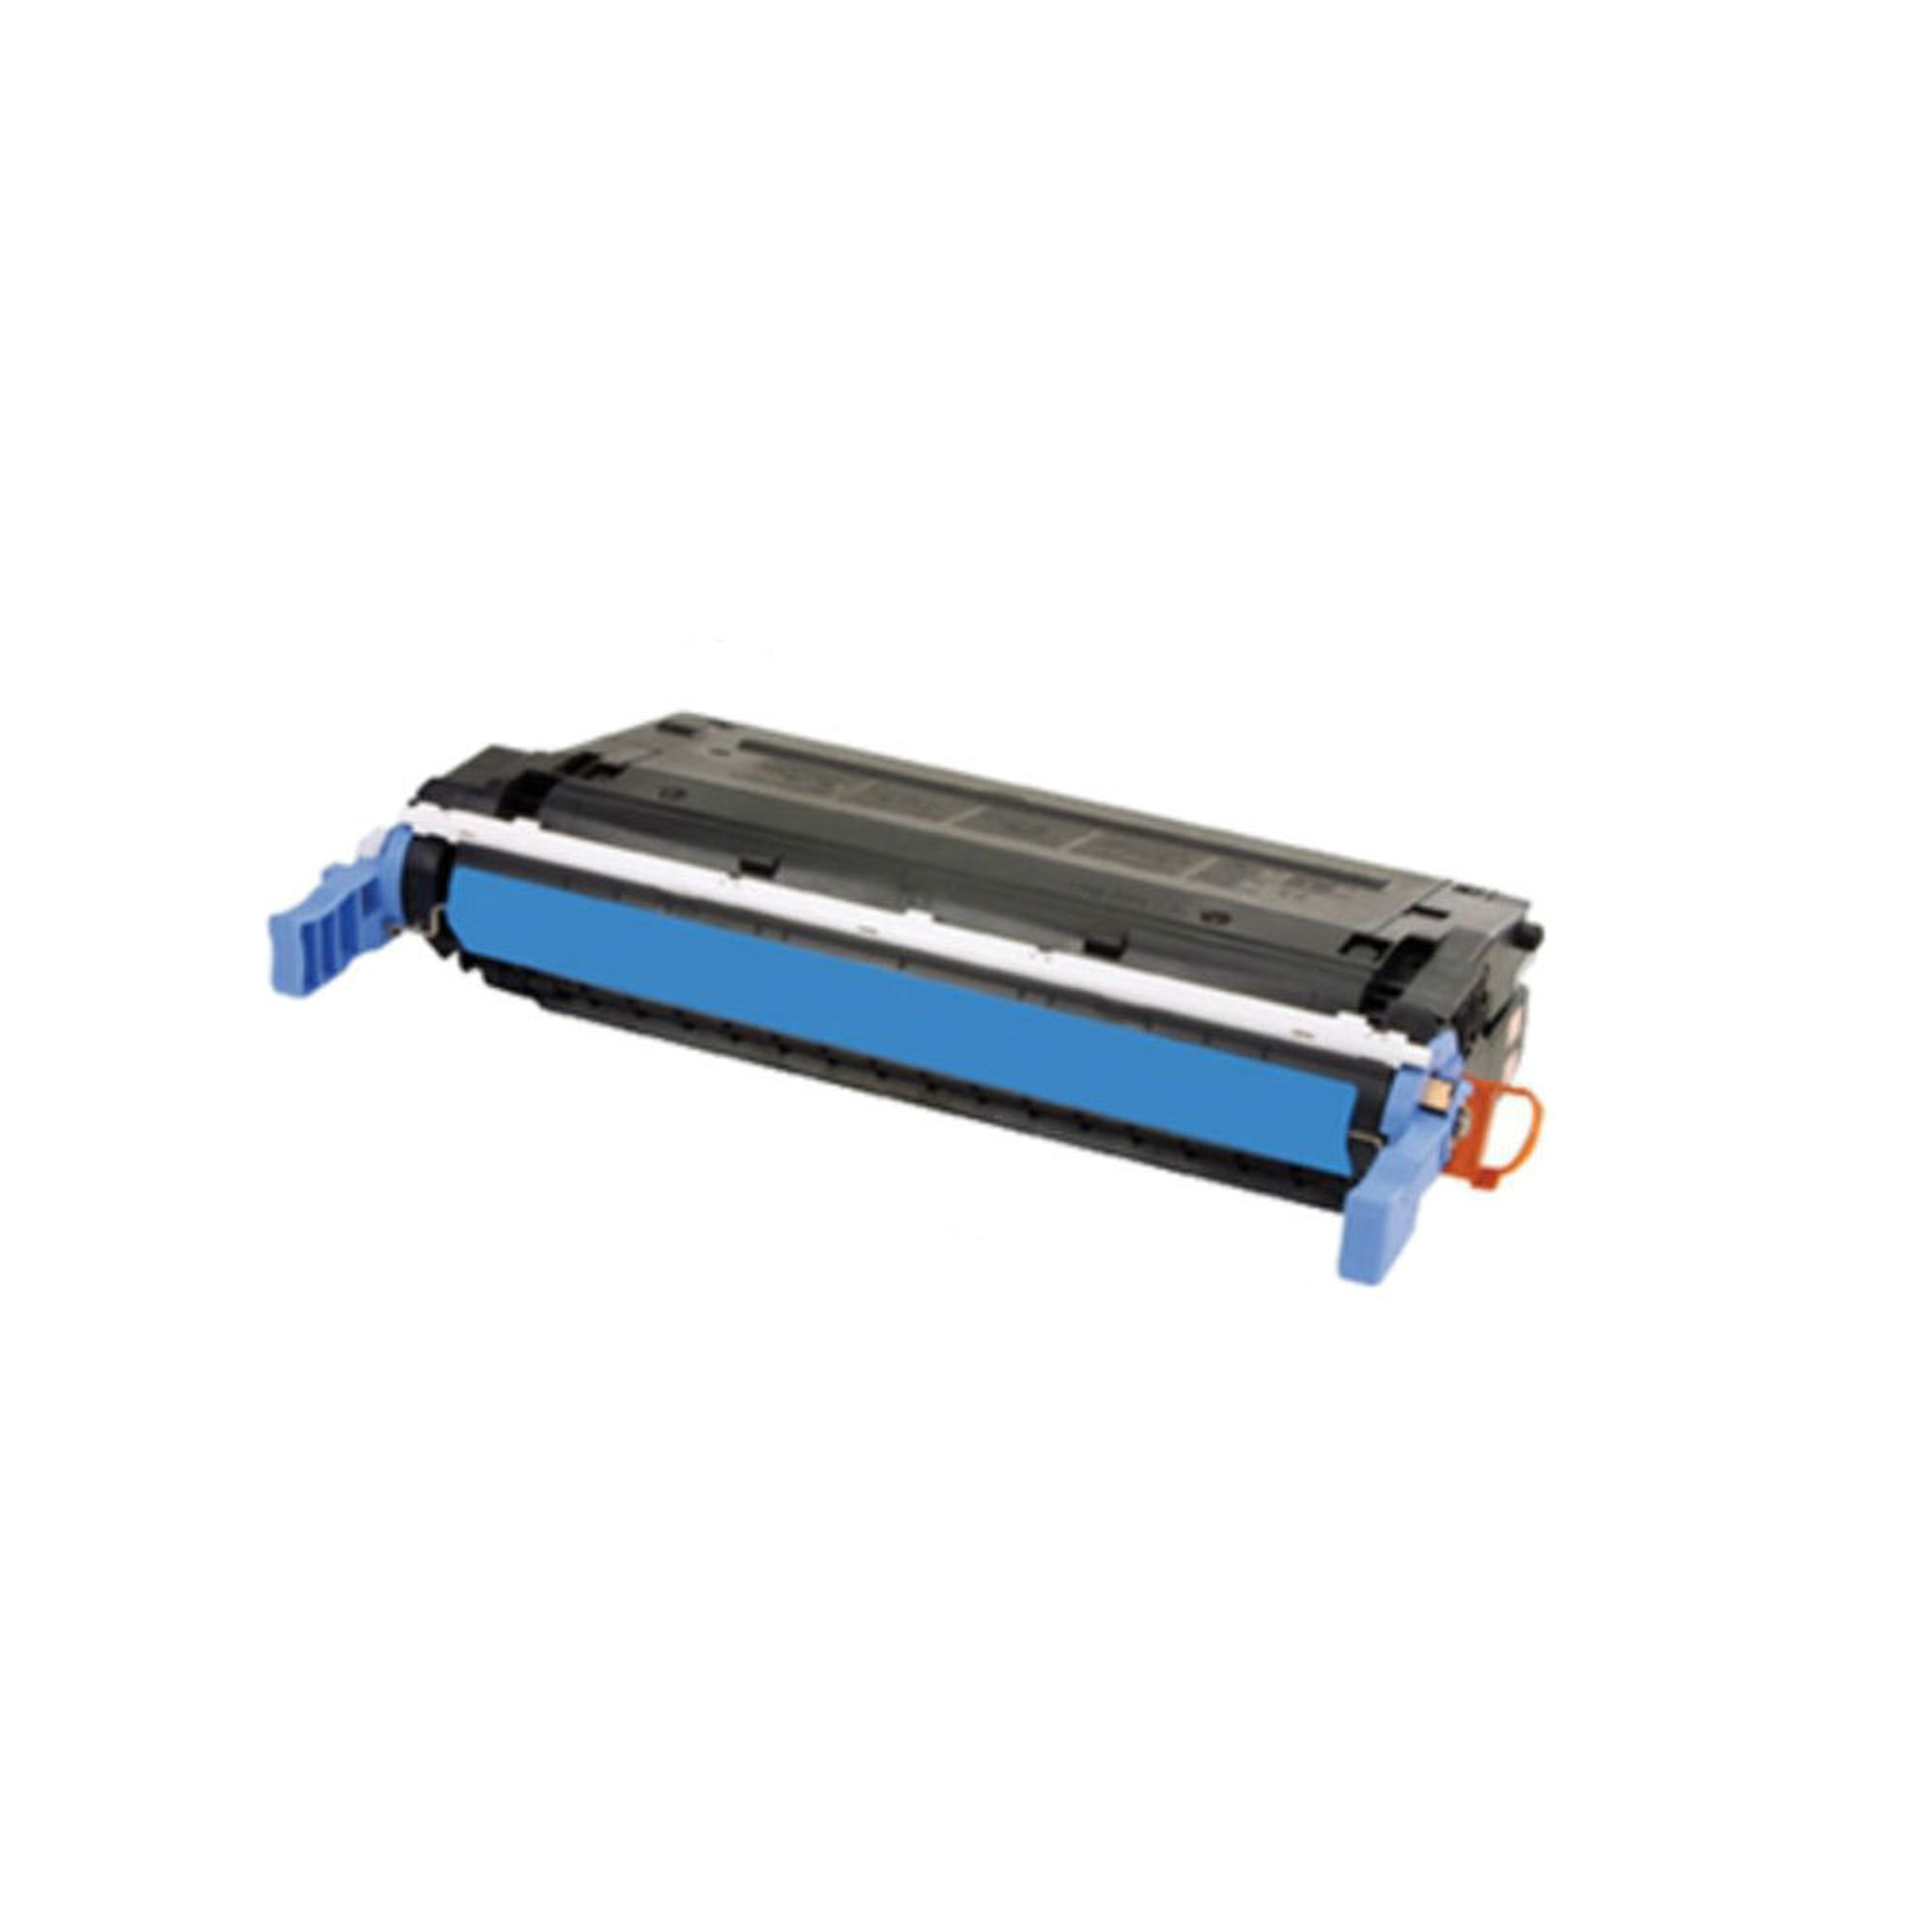 Cyan Toner for HP Laserjet 4700 Printer